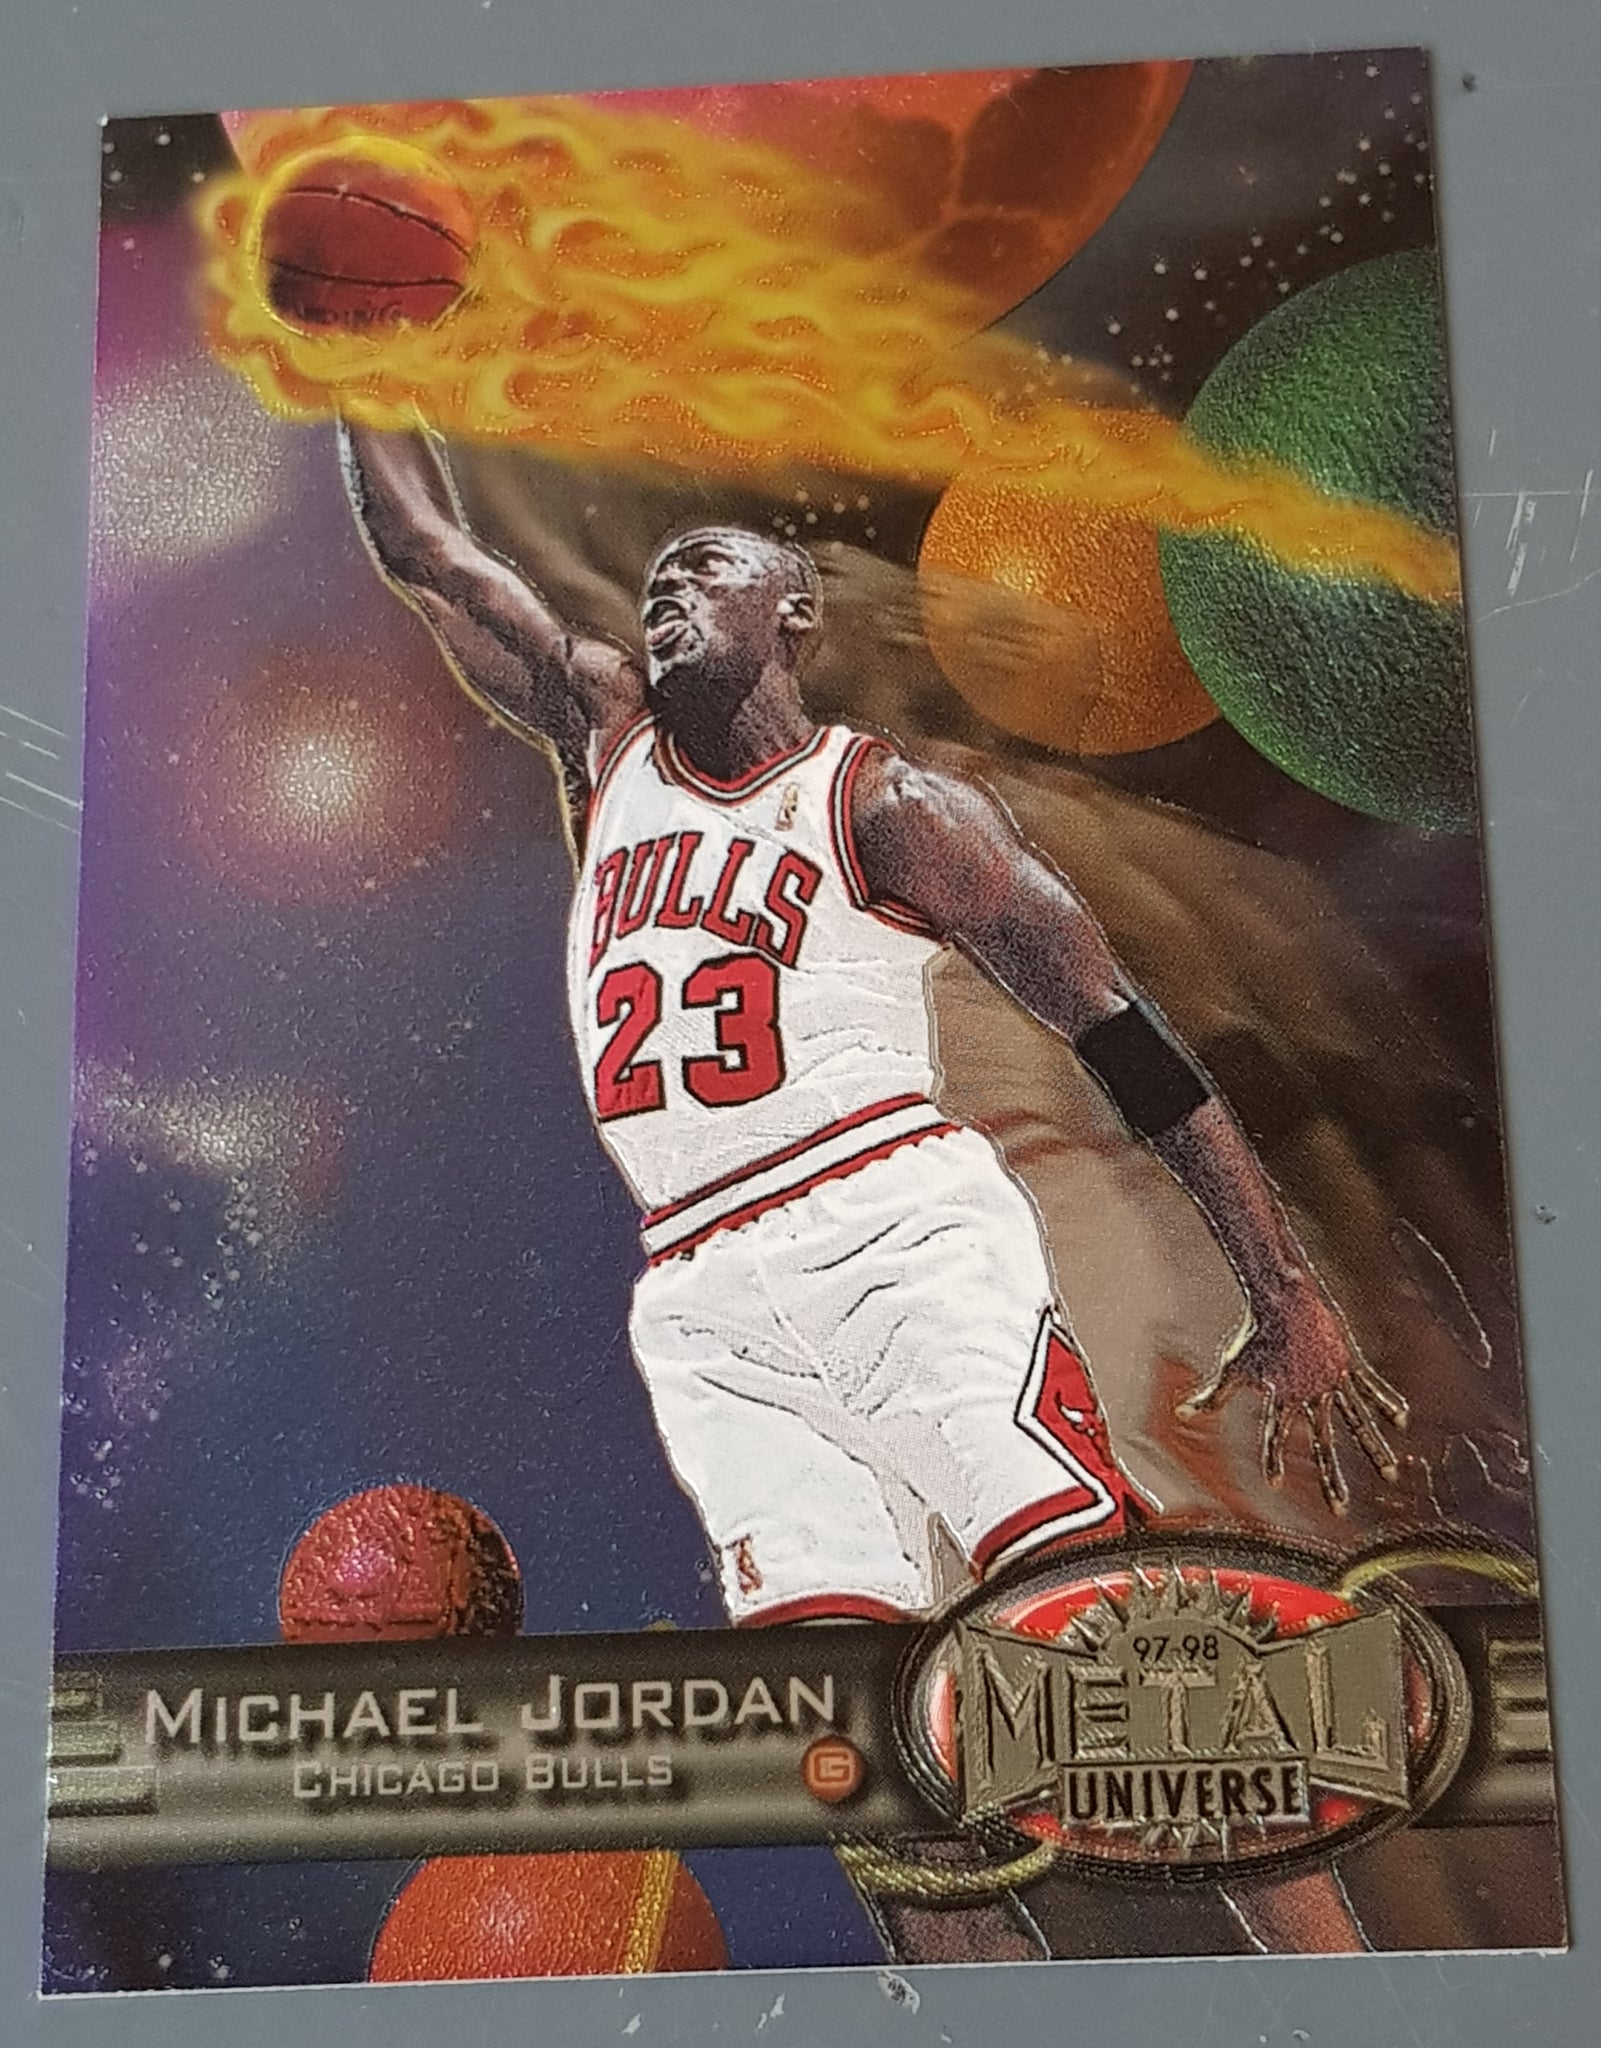 1997-98 Fleer Metal Universe Championship Michael Jordan #23 Trading Card